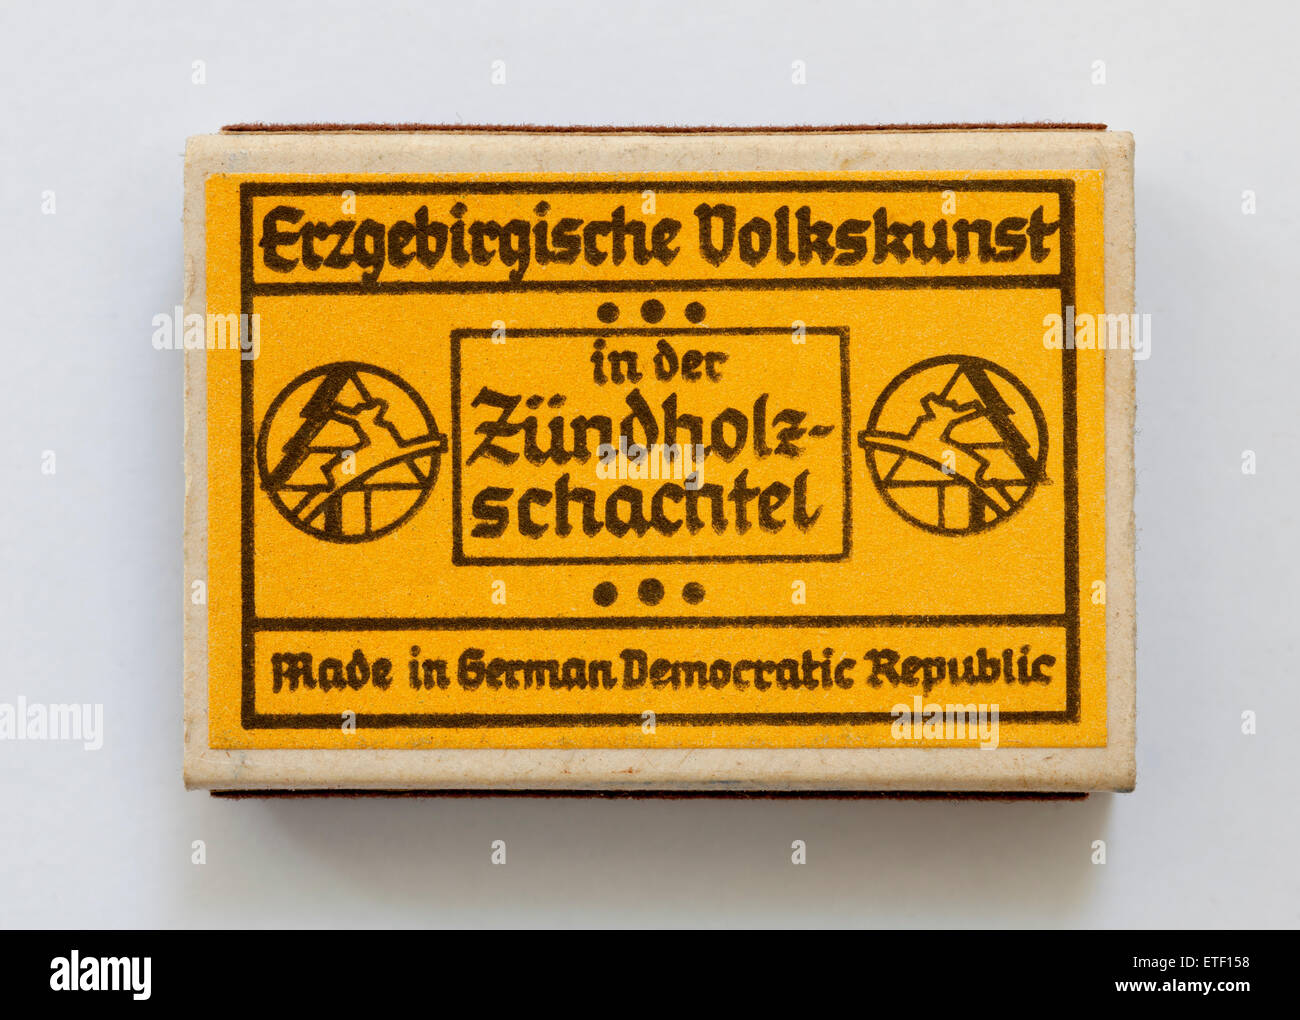 Matchbox Vintage fait main contenant l'art populaire en bois jouet. Dans Zundholzschachtel Erzgebirgische der Volkskunst Banque D'Images